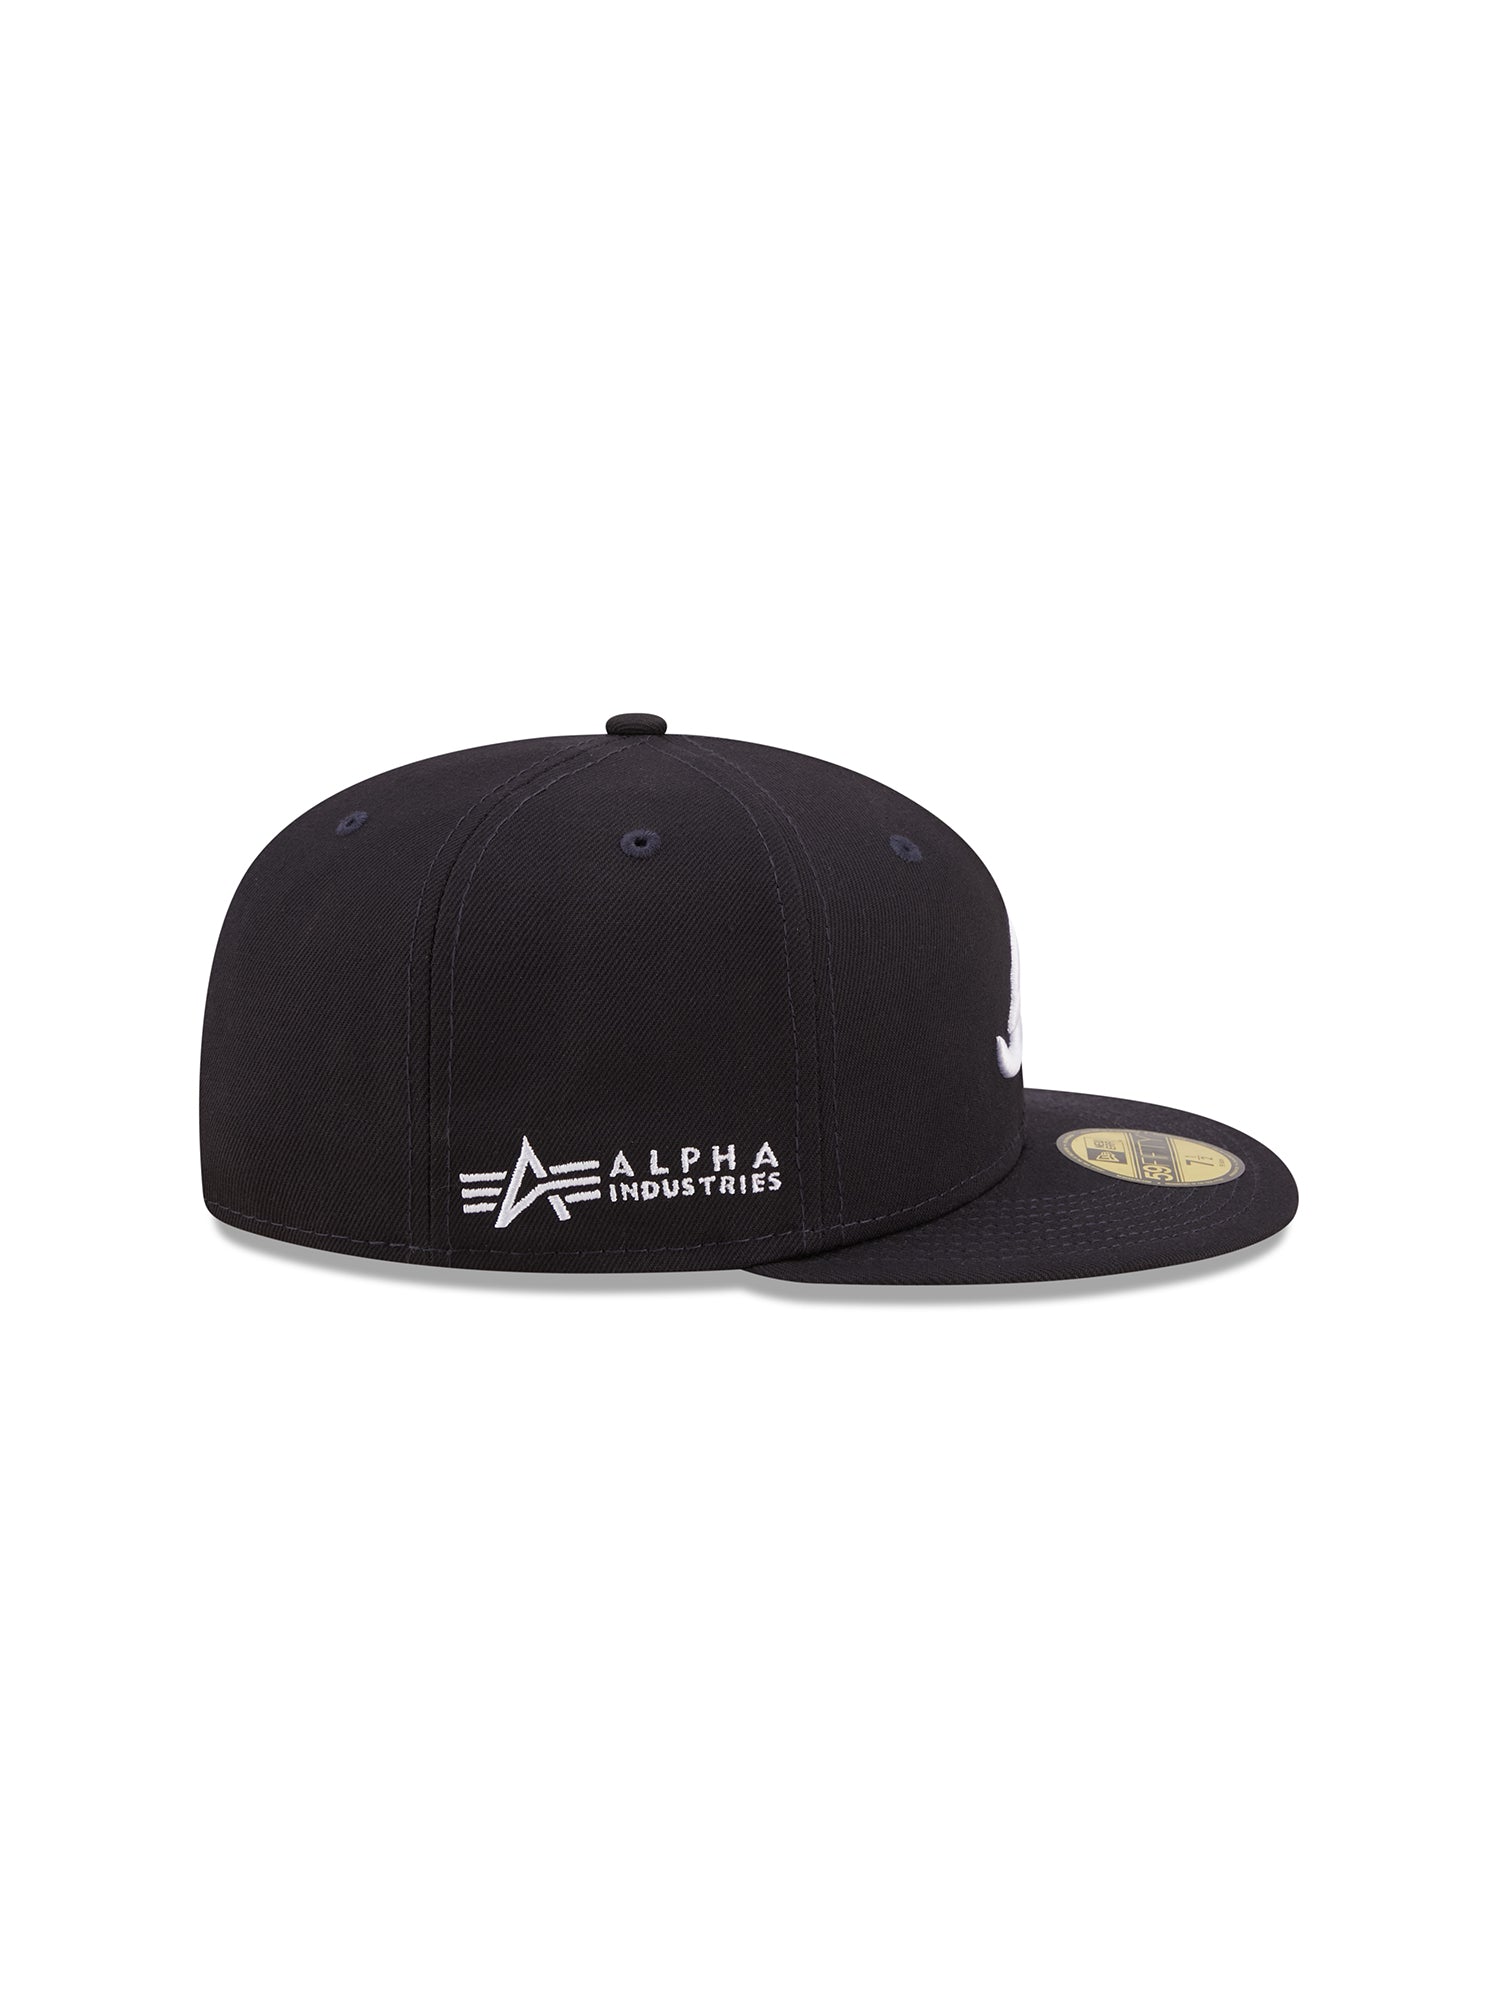 ALPHA X NEW ERA BRAVES CAP ACCESSORY Alpha Industries, Inc. 